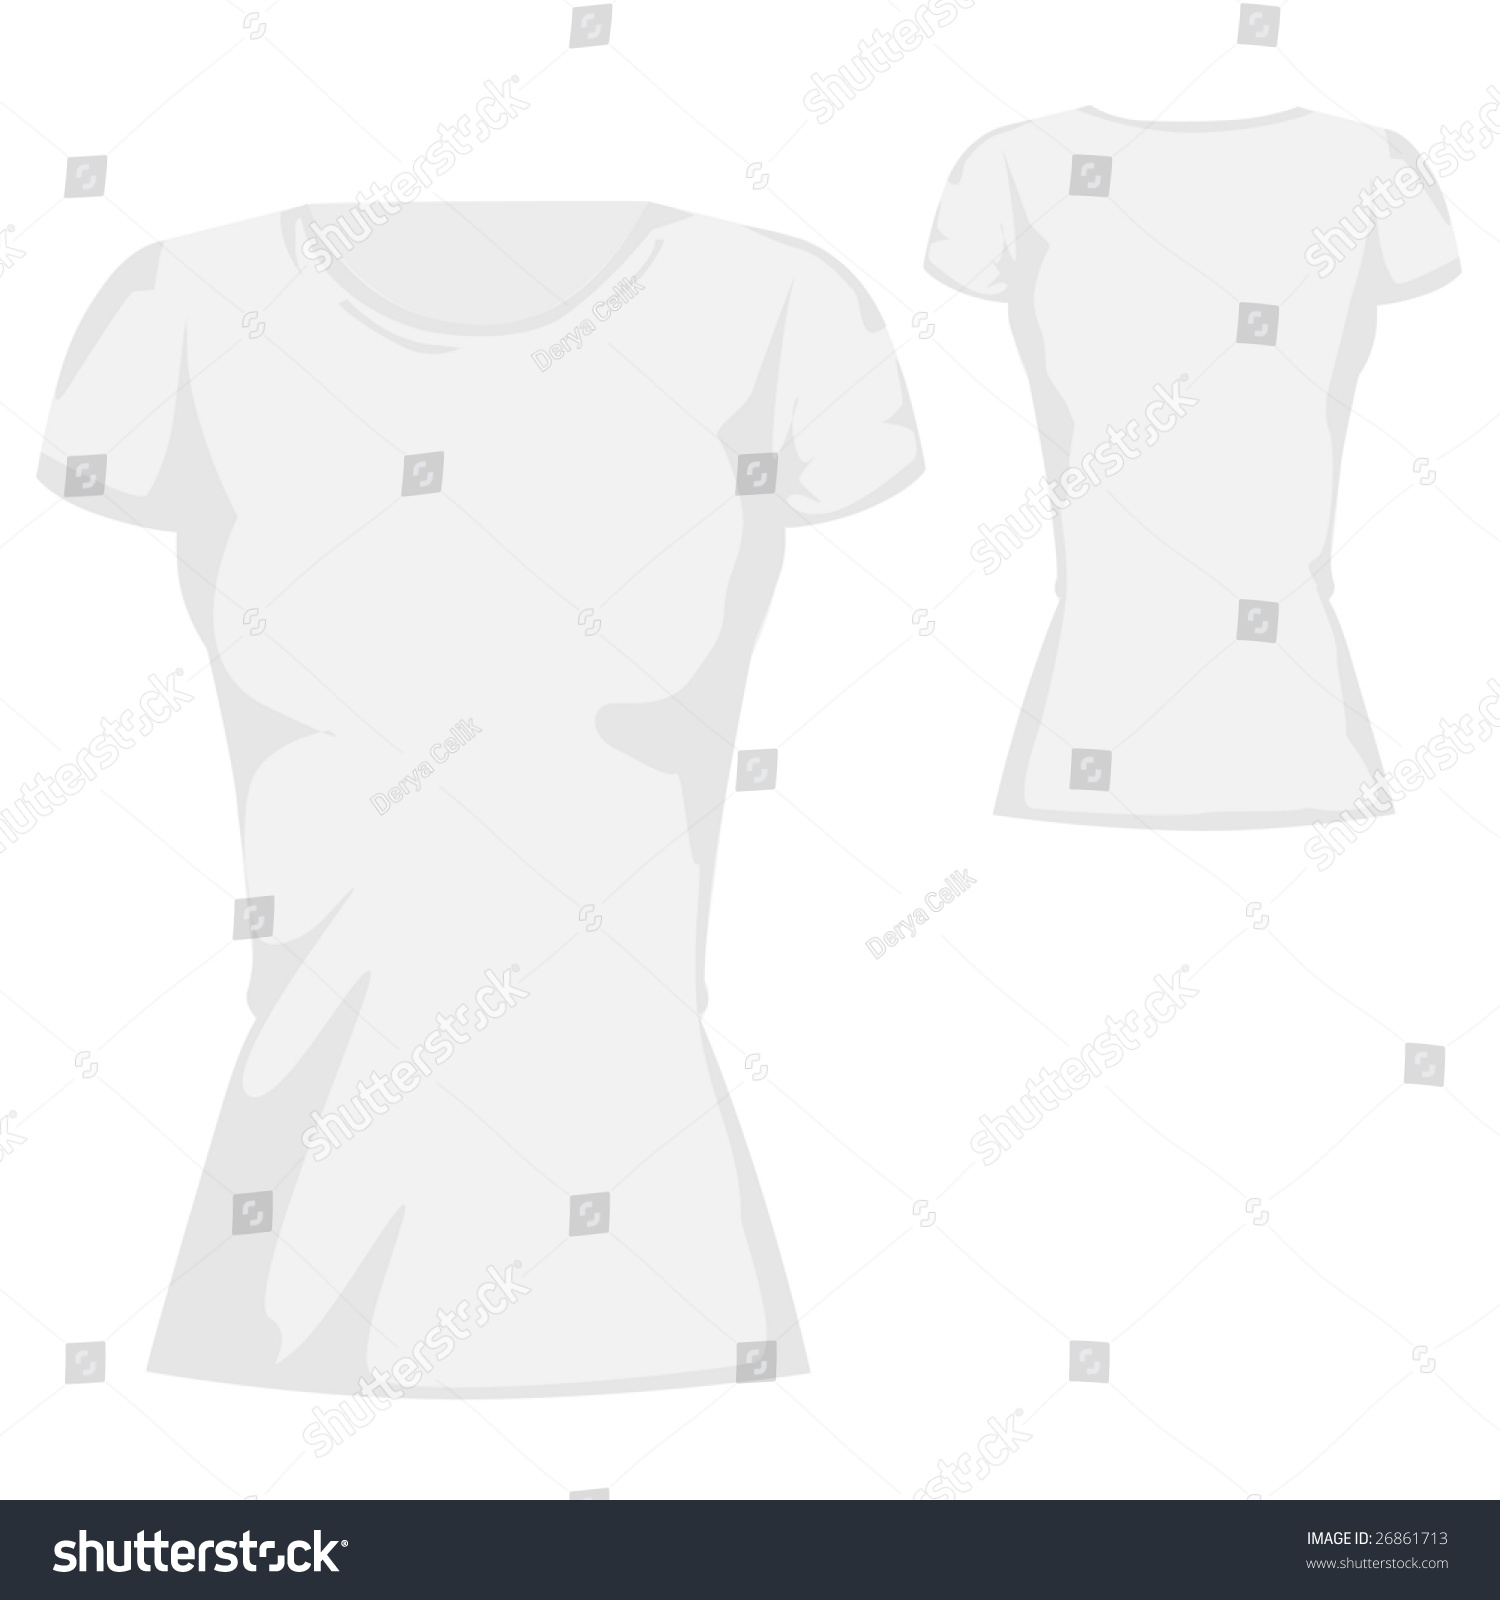 White Blank Tshirt Design Template Womenswear Stock Vector 26861713 ...